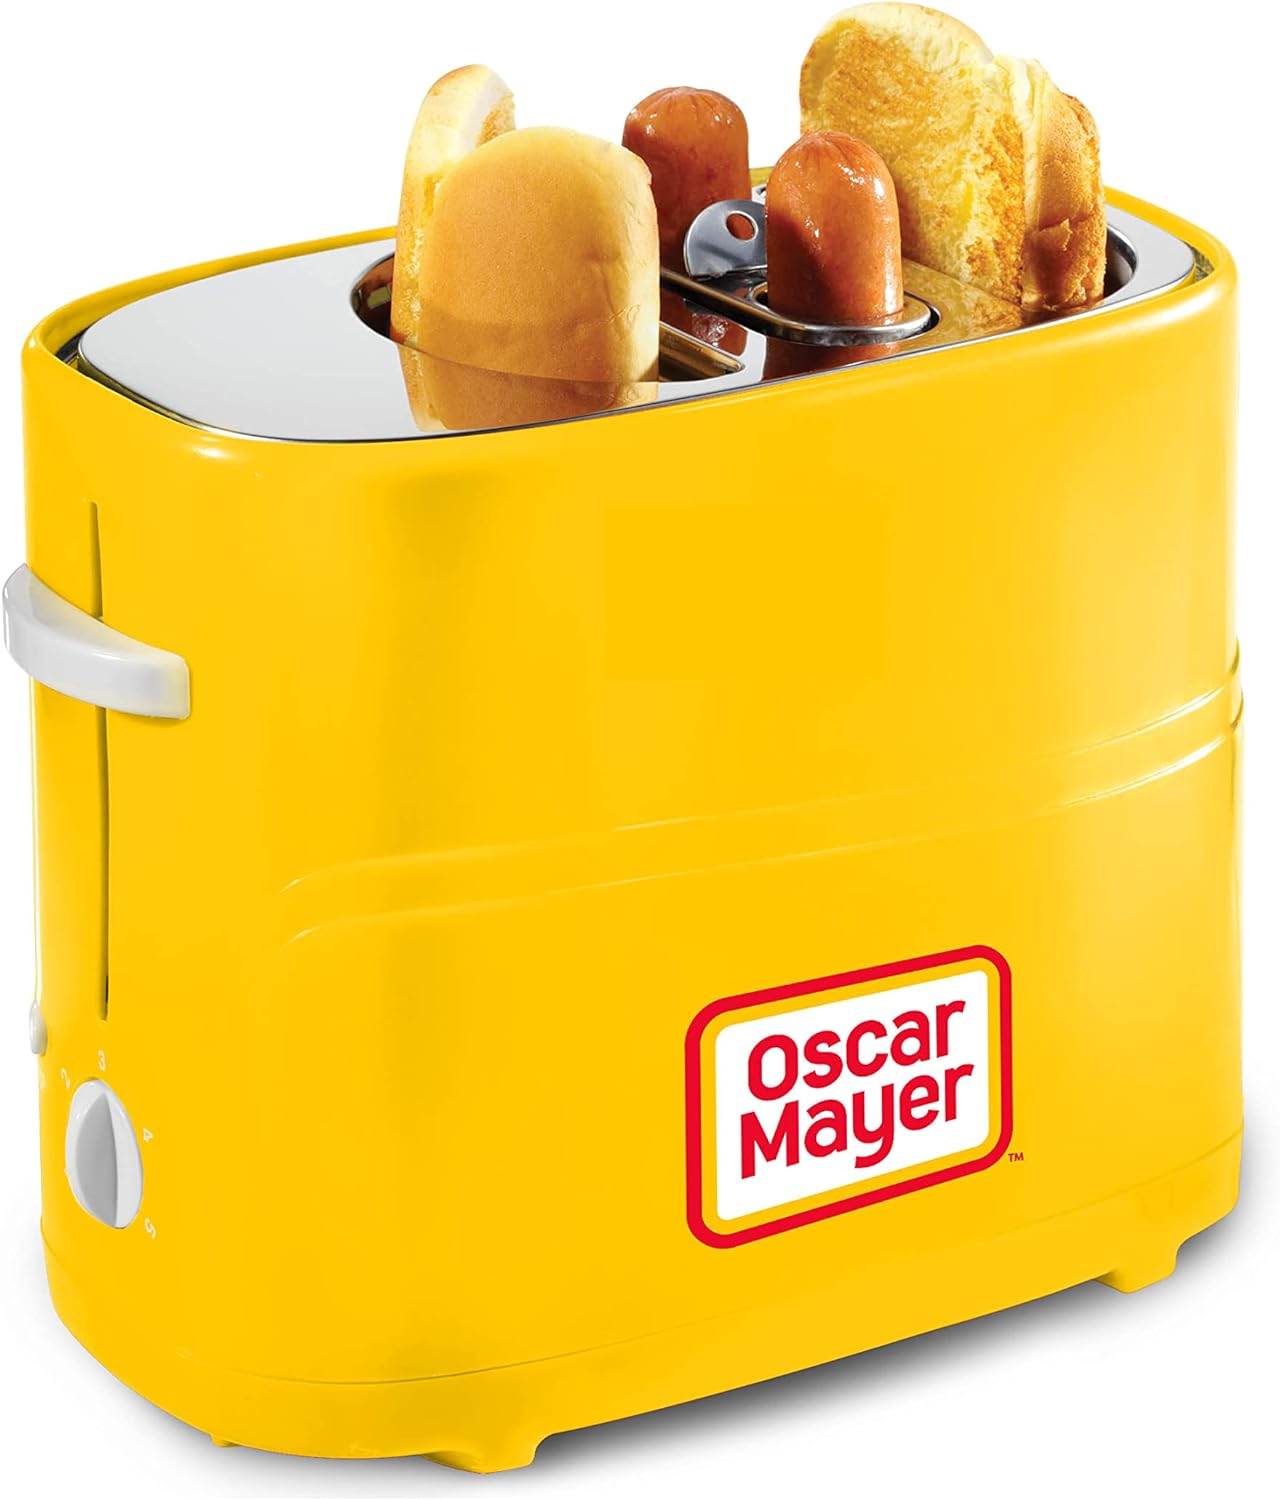 Oscar Mayer Wienermobile Hot Dog Toaster